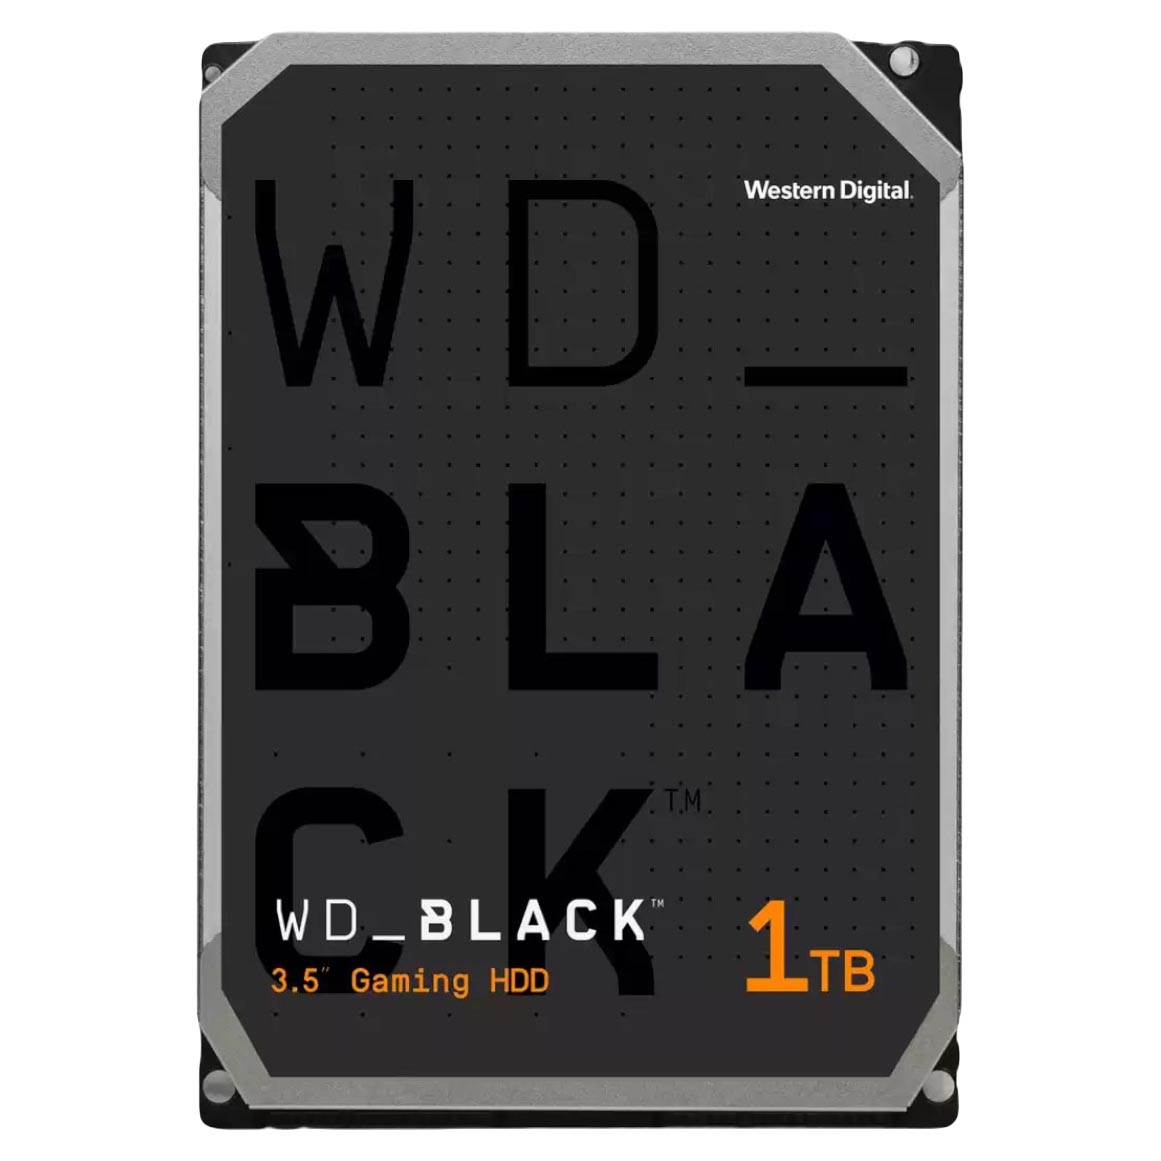 Внутренний жесткий диск Western Digital WD Black Gaming, WD1003FZEX, 1 Тб внутренний жесткий диск western digital gold 3 5 8 тб wd8004fryz